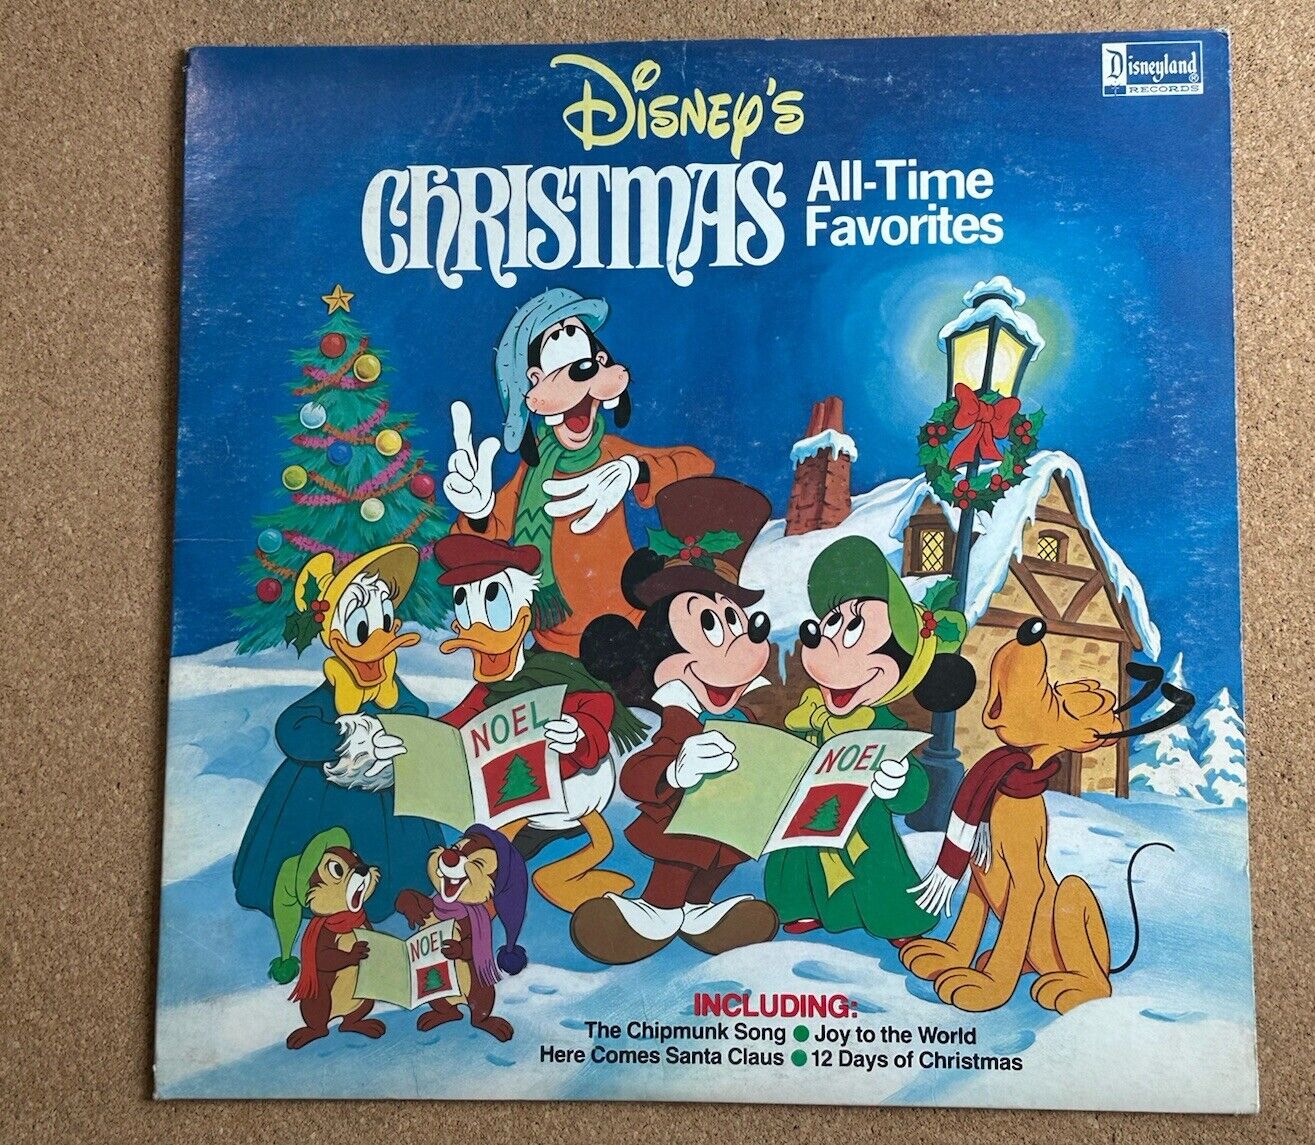 VINTAGE DISNEY’S CHRISTMAS ALL-TIME FAVORITES LP VINYL RECORD DISNEYLAND (1981)